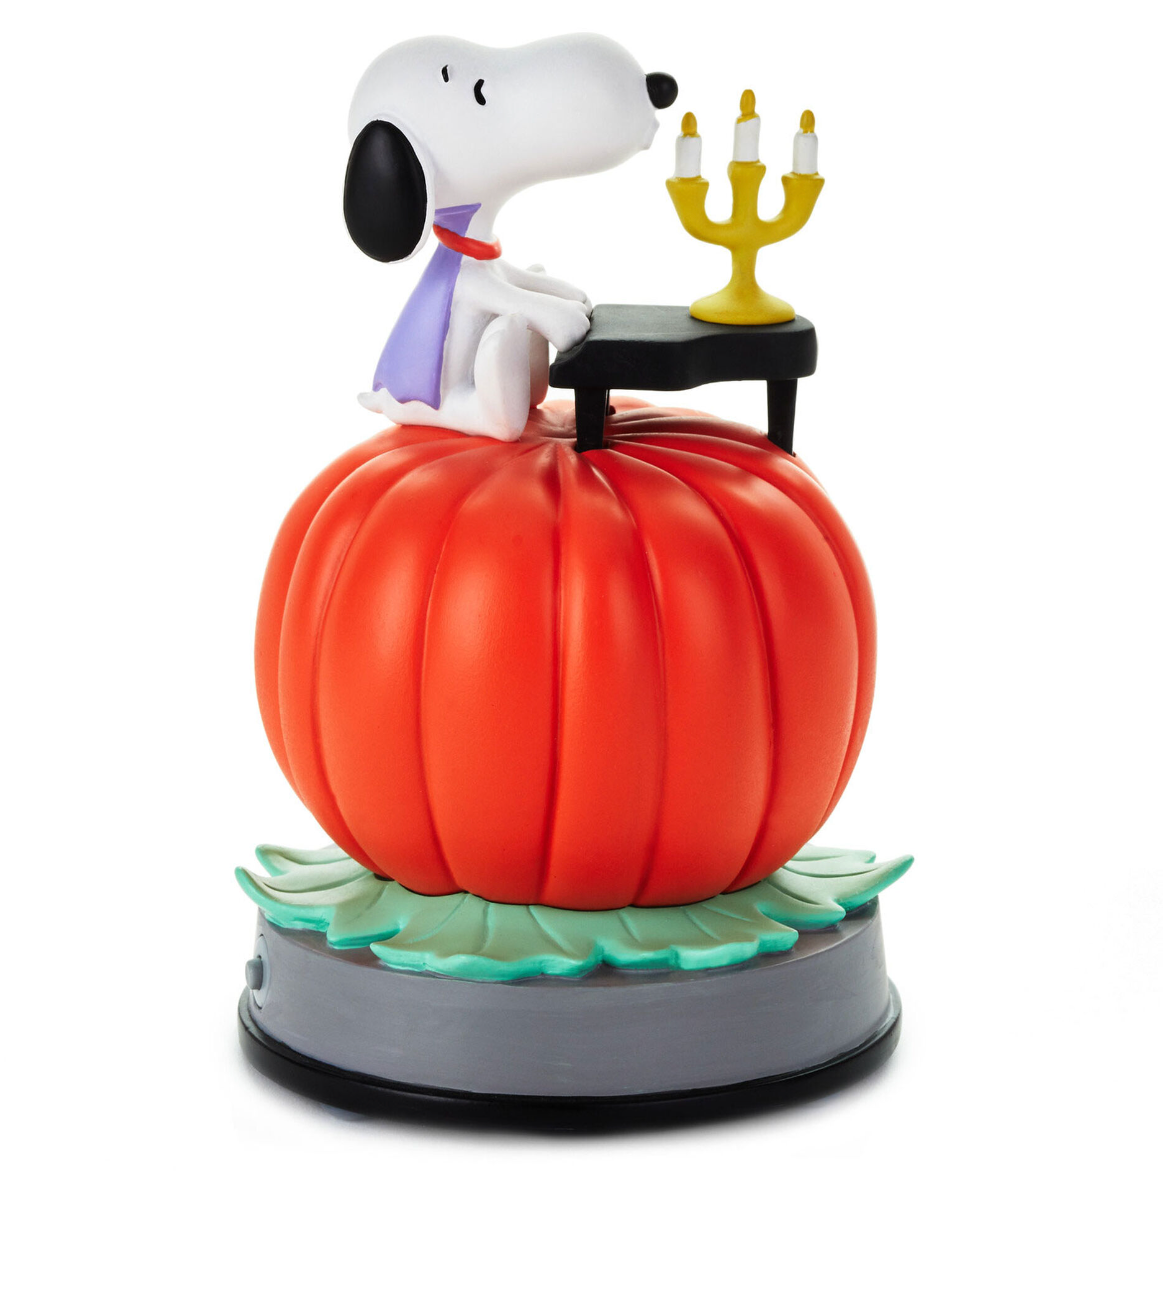 Hallmark Halloween Peanuts Spooky Snoopy Figurine With Sound New with Tag